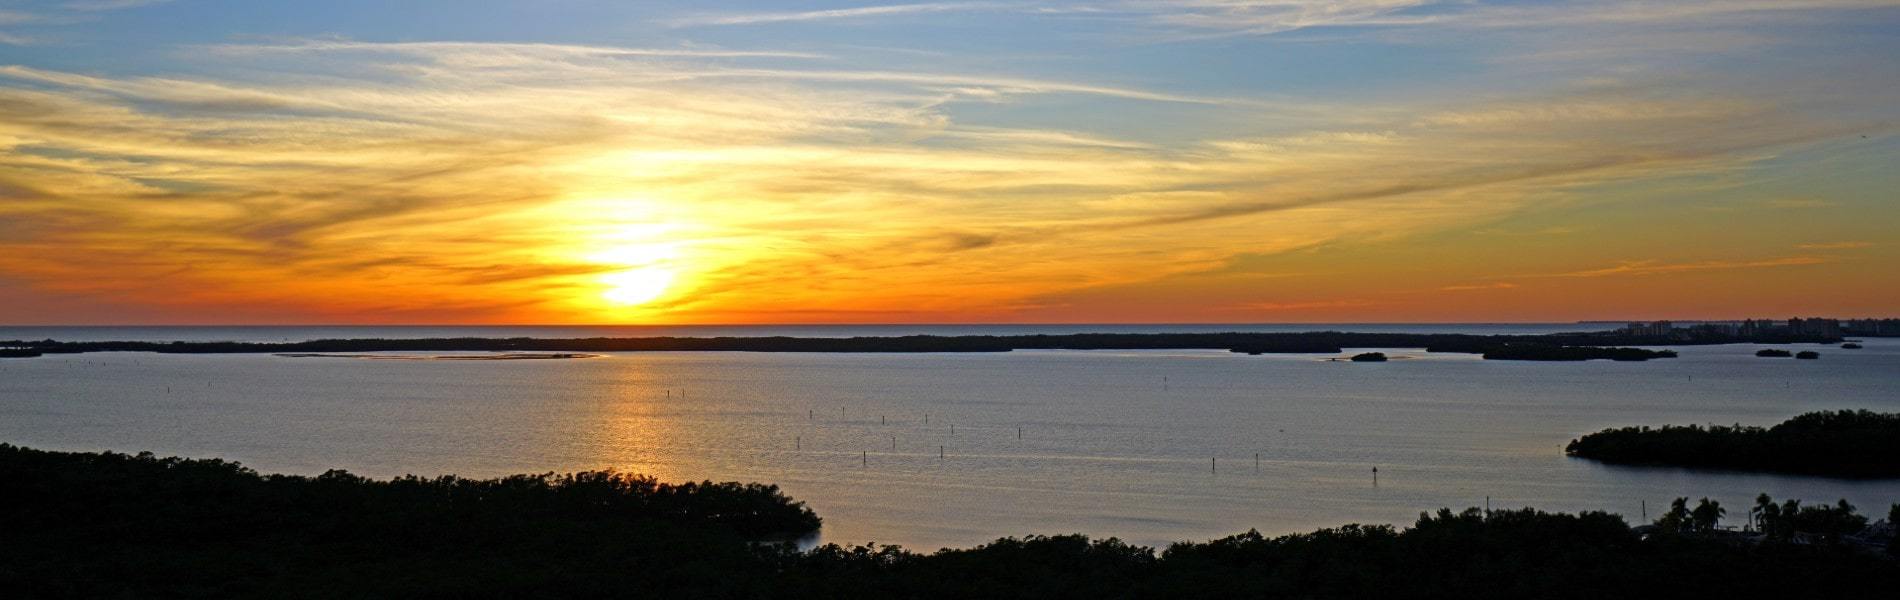 beautiful sunset over estero bay in southwest florida